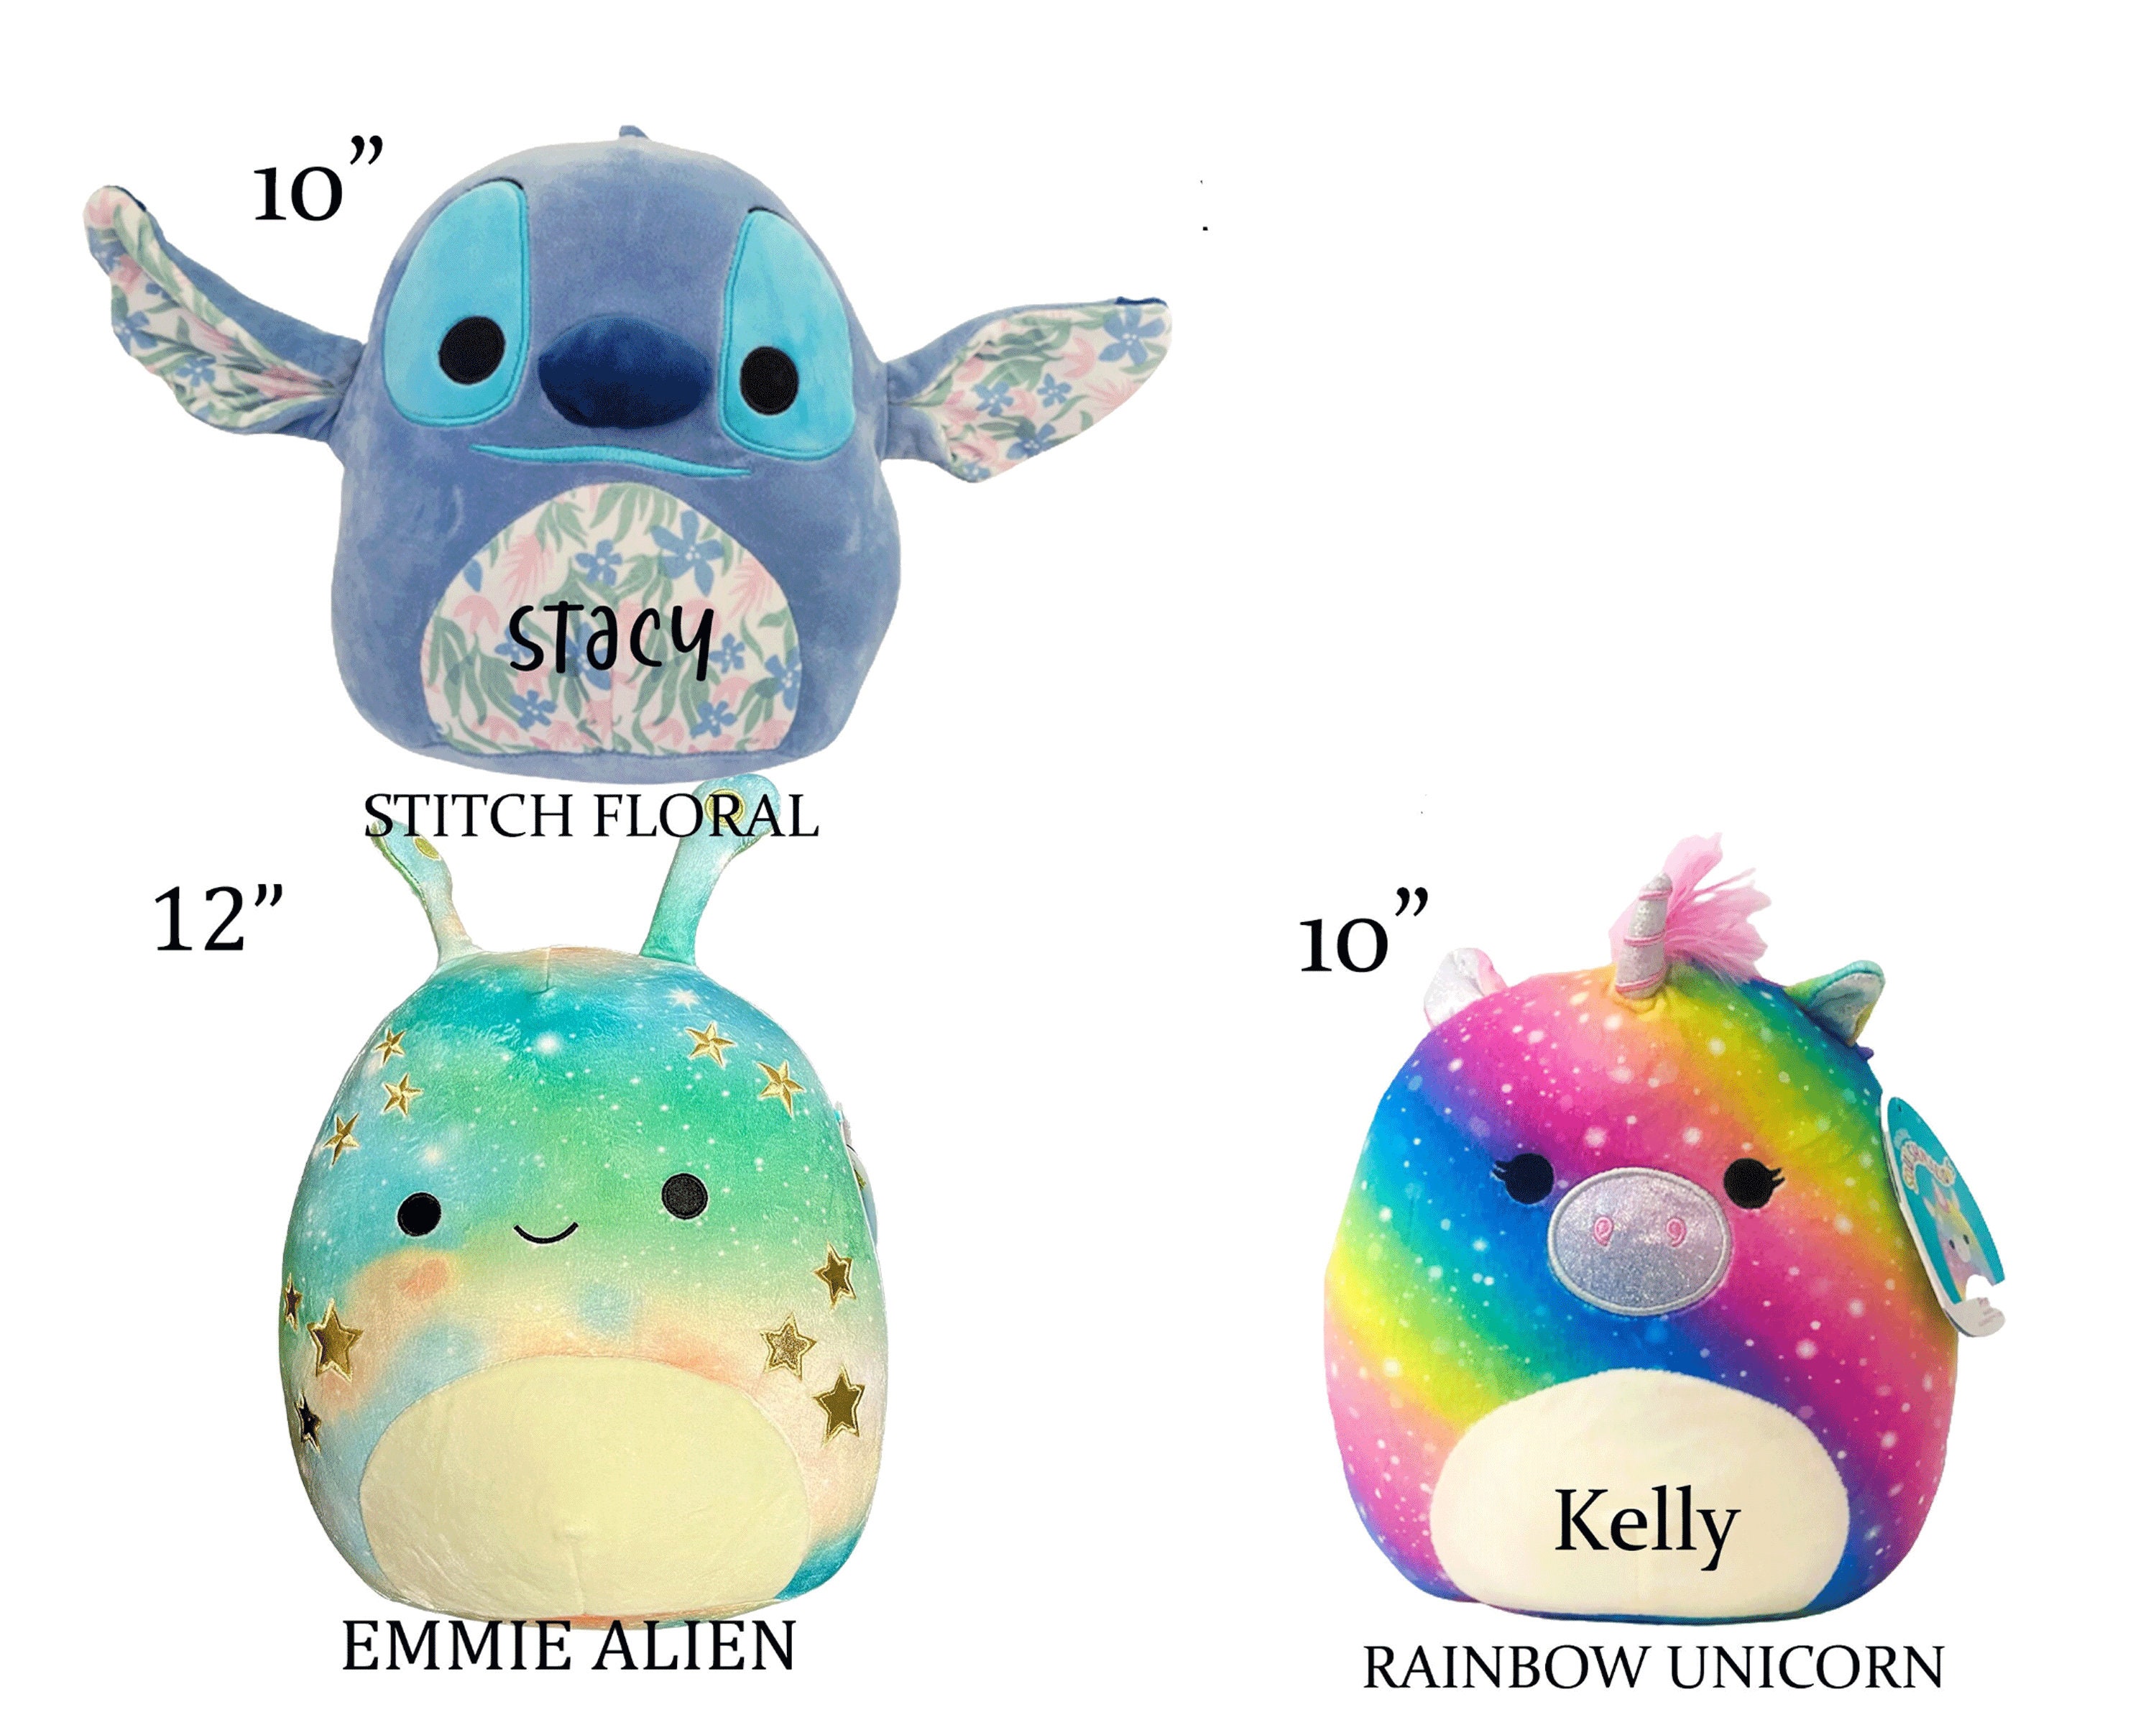 Disney Stitch stuffed animal 8.6in, Five Below